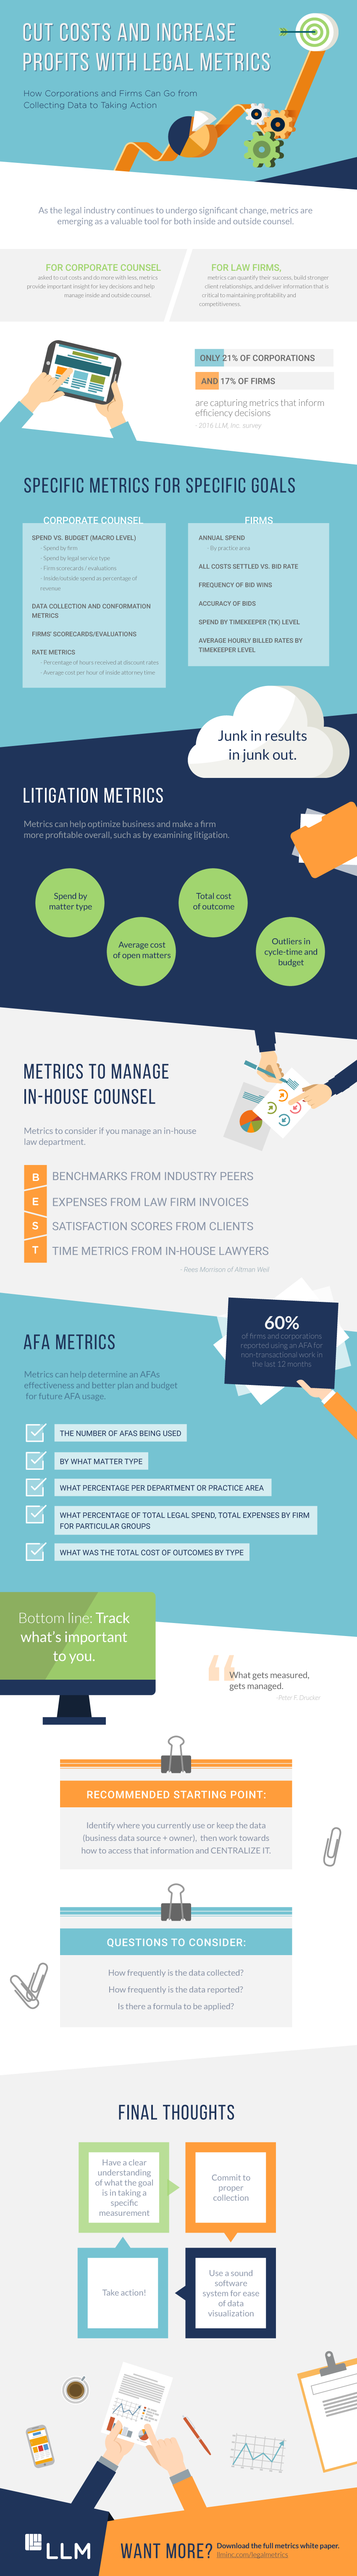 infographic-metrics-final